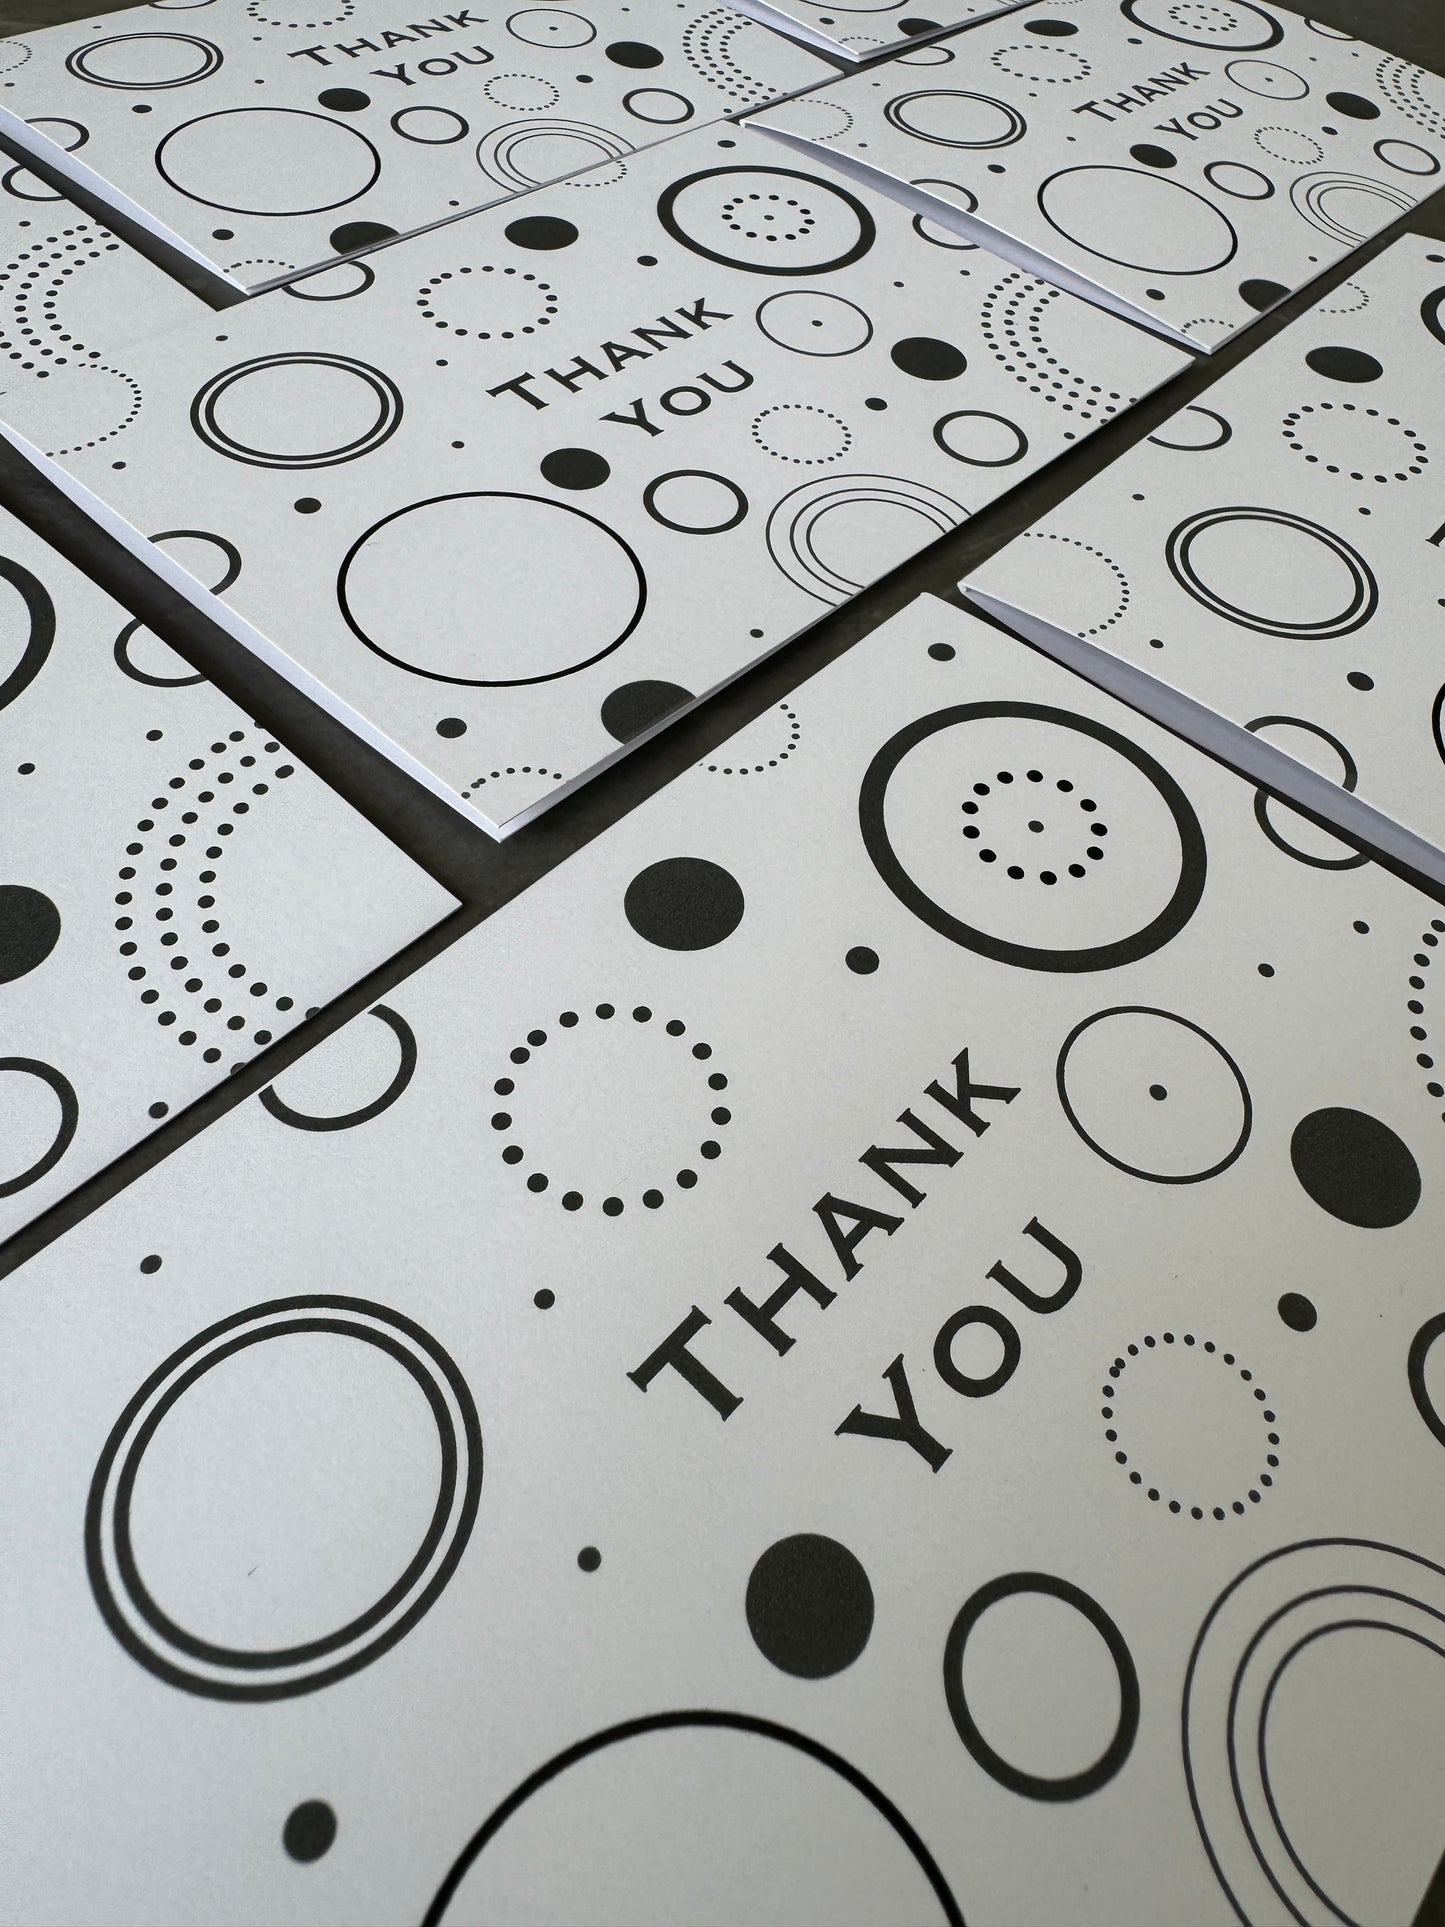 Thank You Note Card set - Circles and Dots Pattern